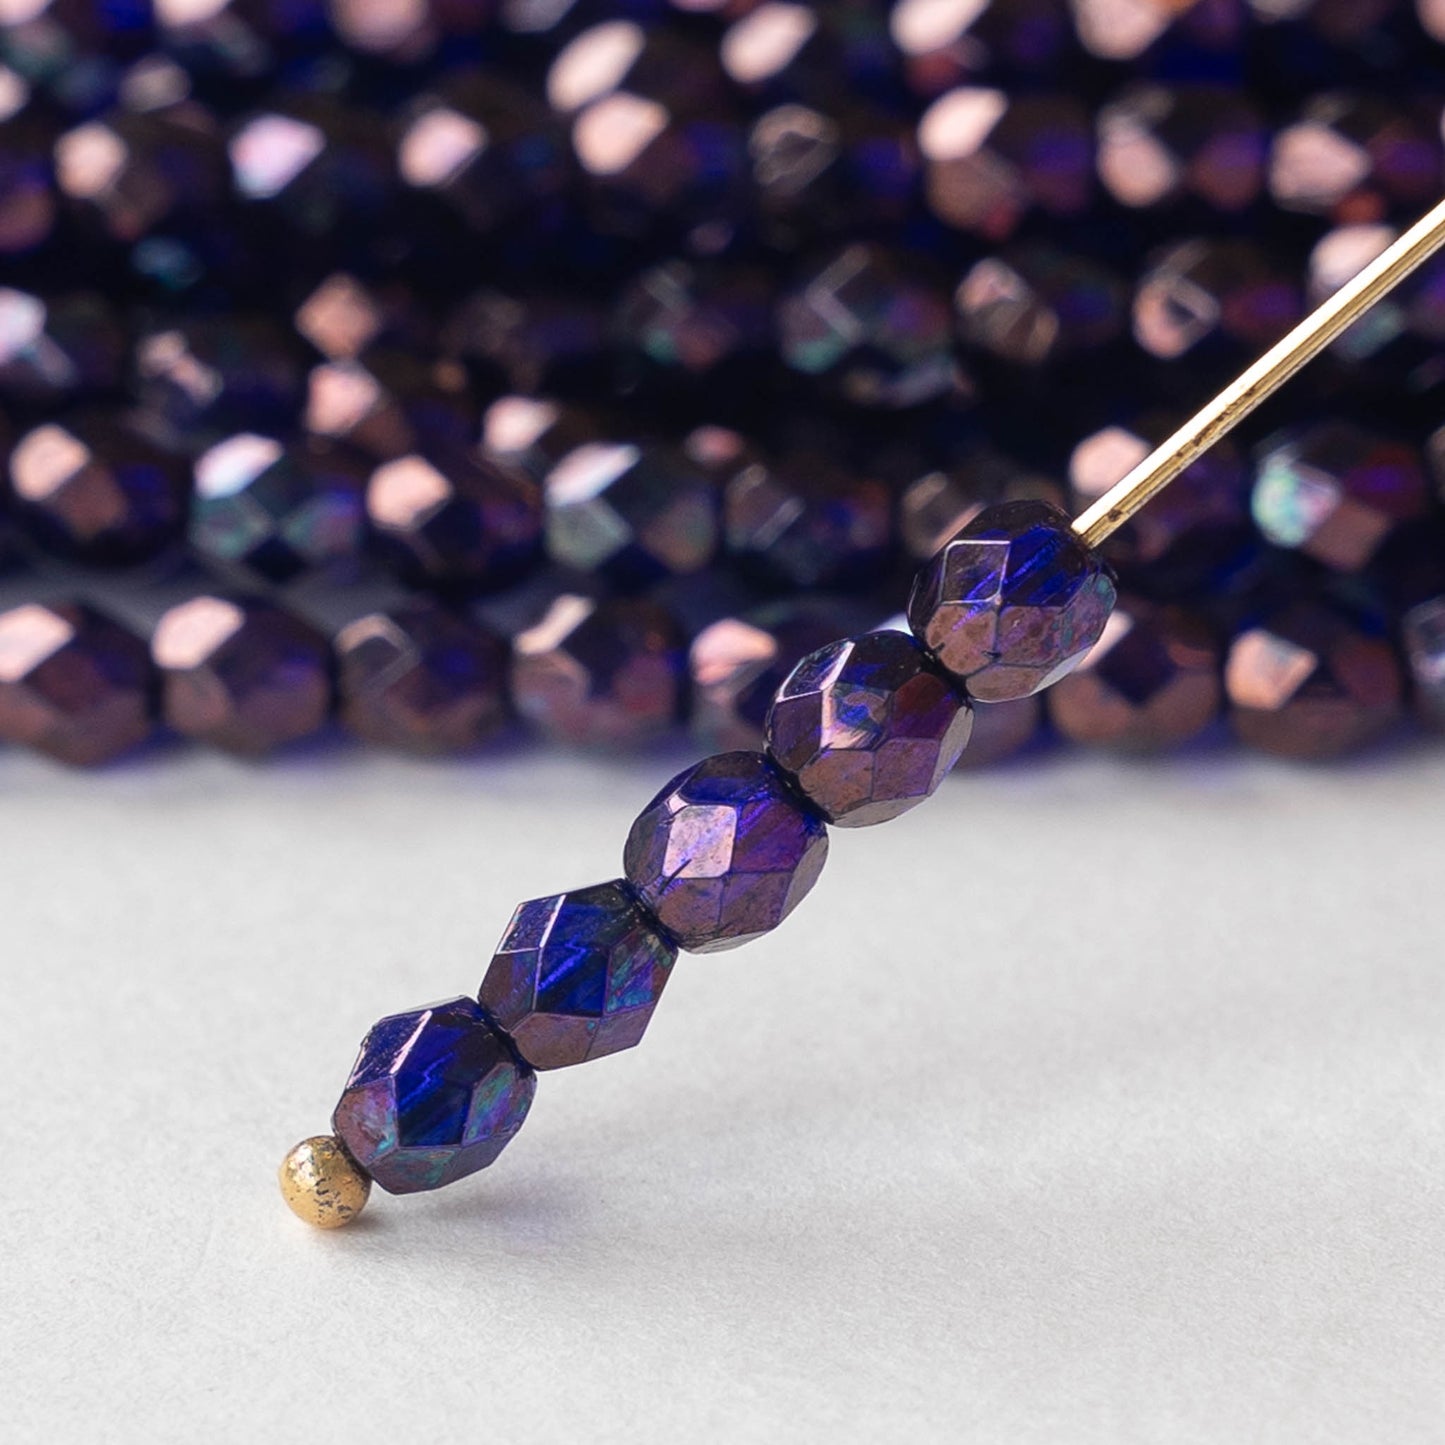 4mm Faceted Round Beads - Cobalt Blue Vega - 50 beads